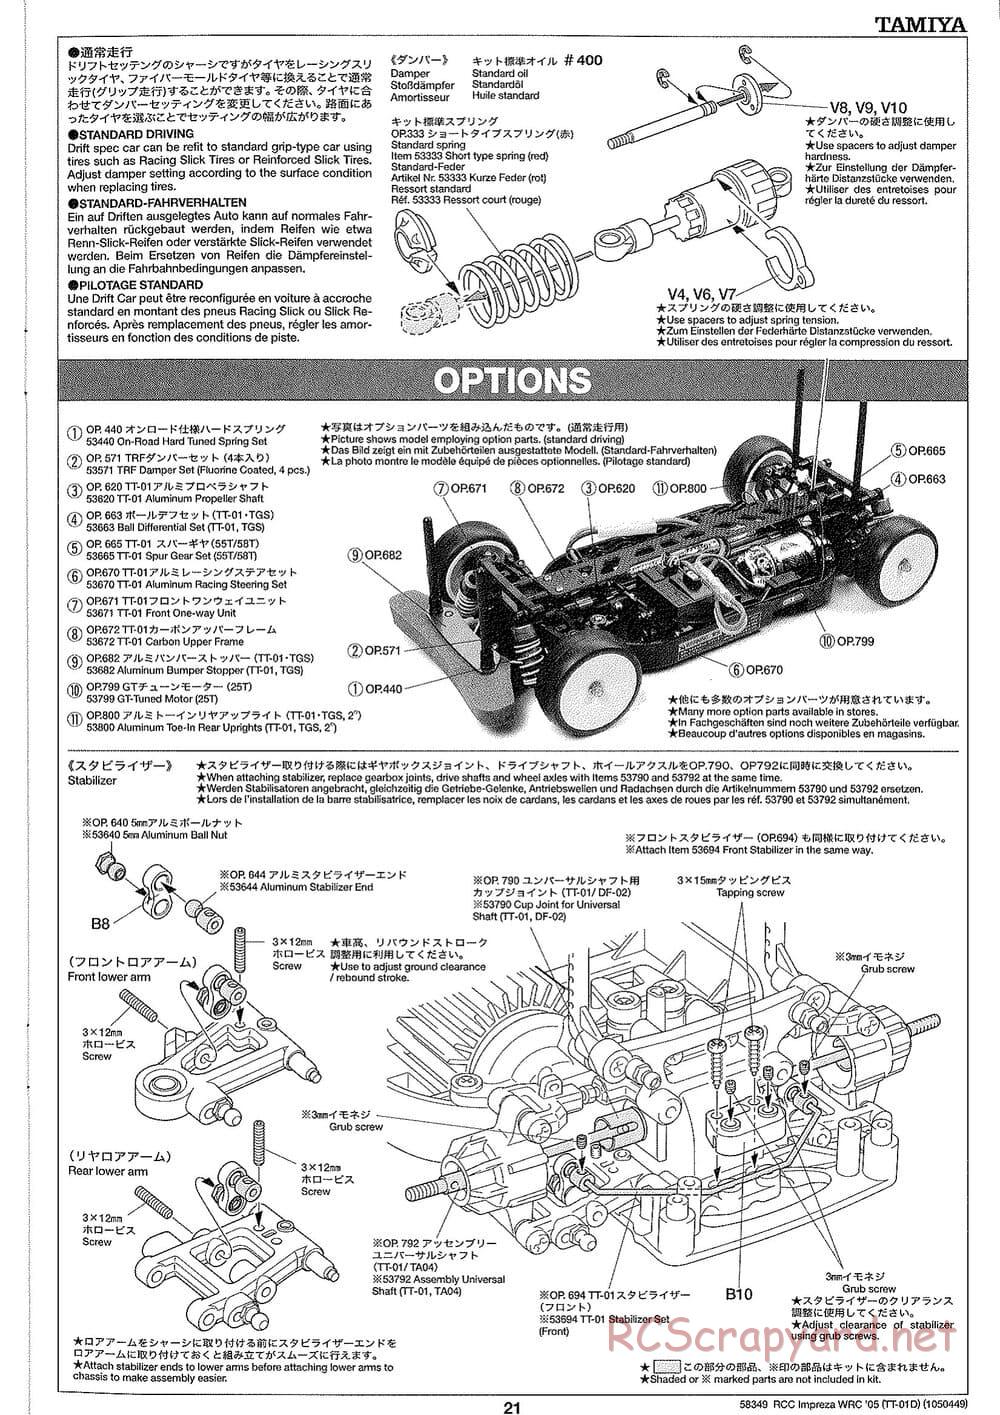 Tamiya - Subaru Impreza WRC Monte Carlo 05 - Drift Spec - TT-01D Chassis - Manual - Page 21